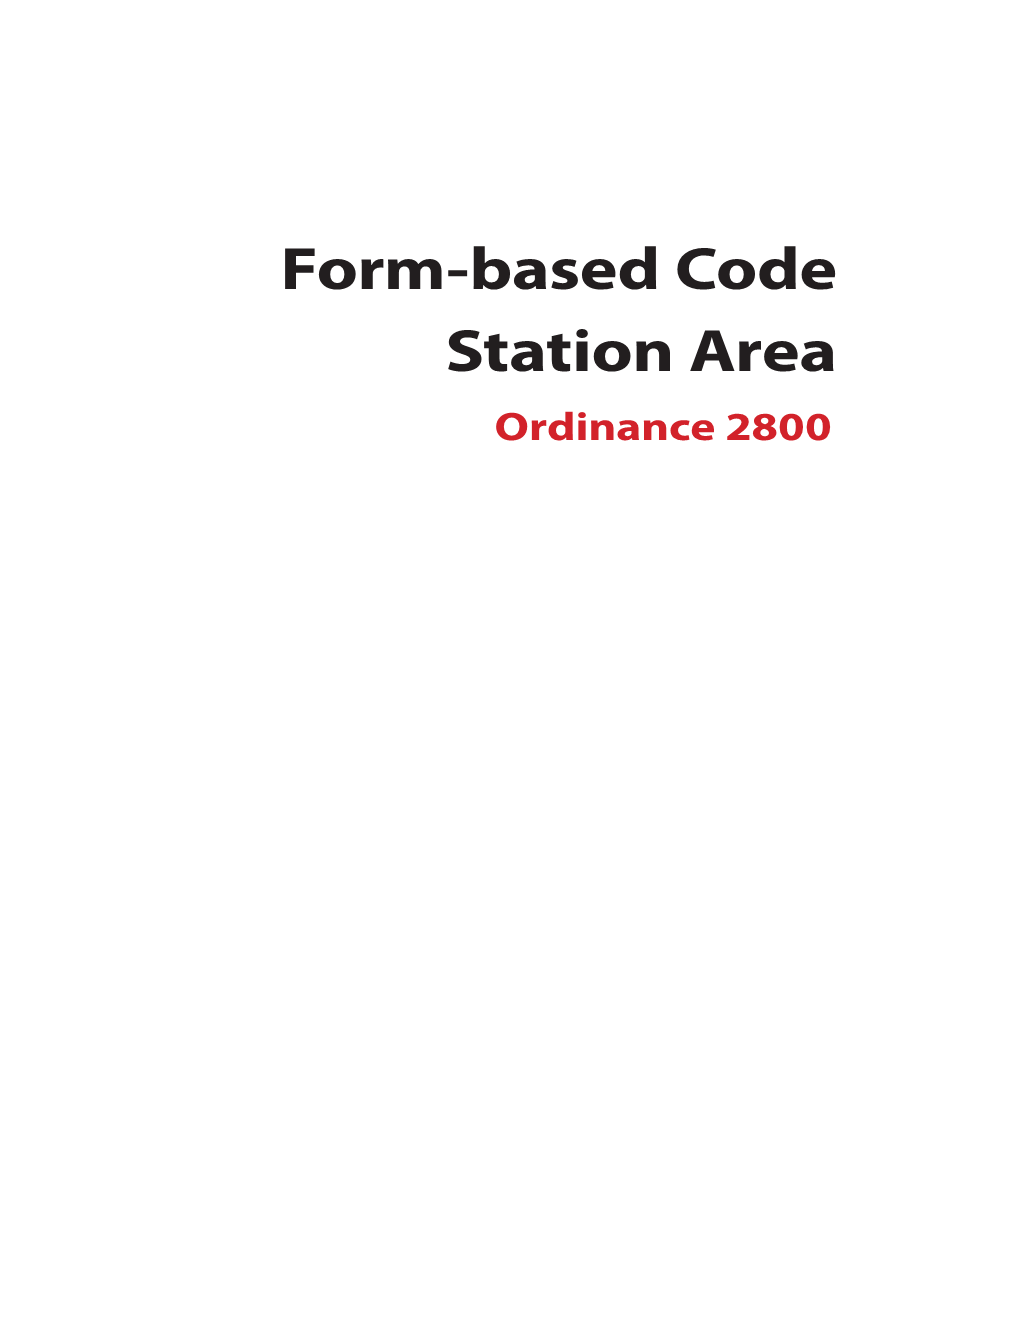 Station Area Ordinance 2800 Ii Form-Based Code — Station Area ORDINANCE NUMBER 2800